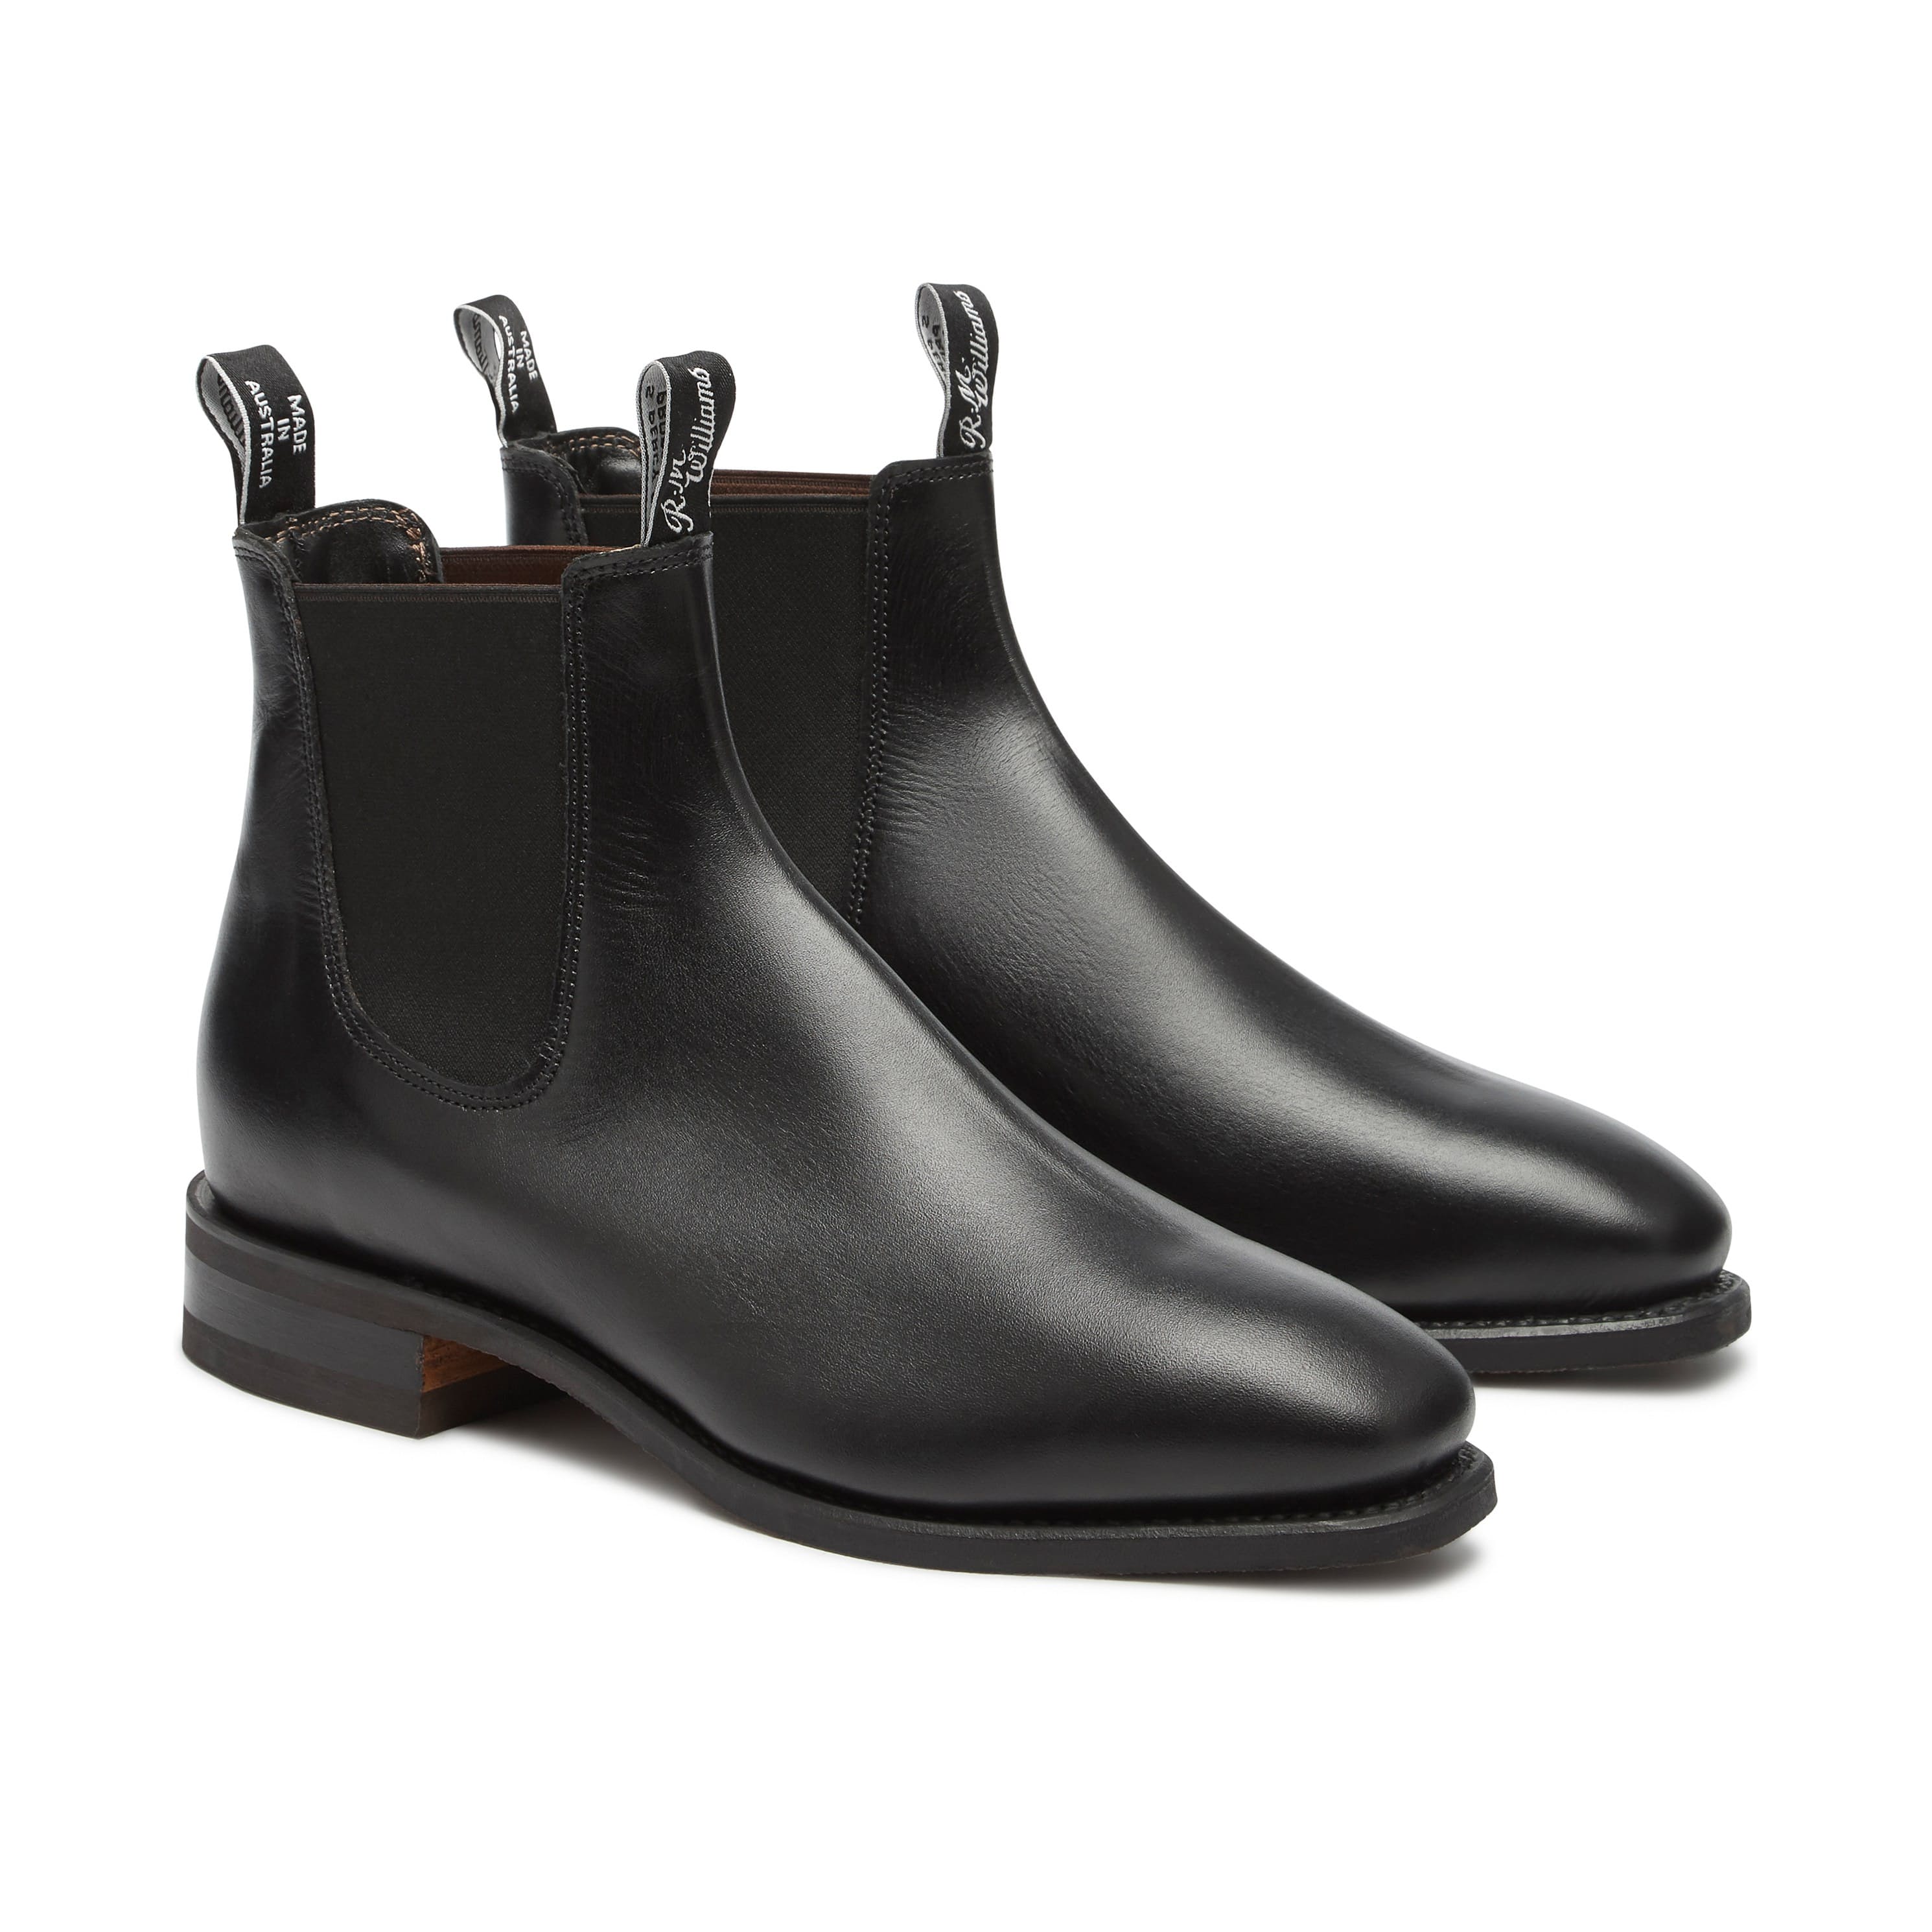 R. M. WILLIAMS COMFORT CRAFTSMAN SQUARE G FIT - Classic ankle boots - black  - Zalando.de